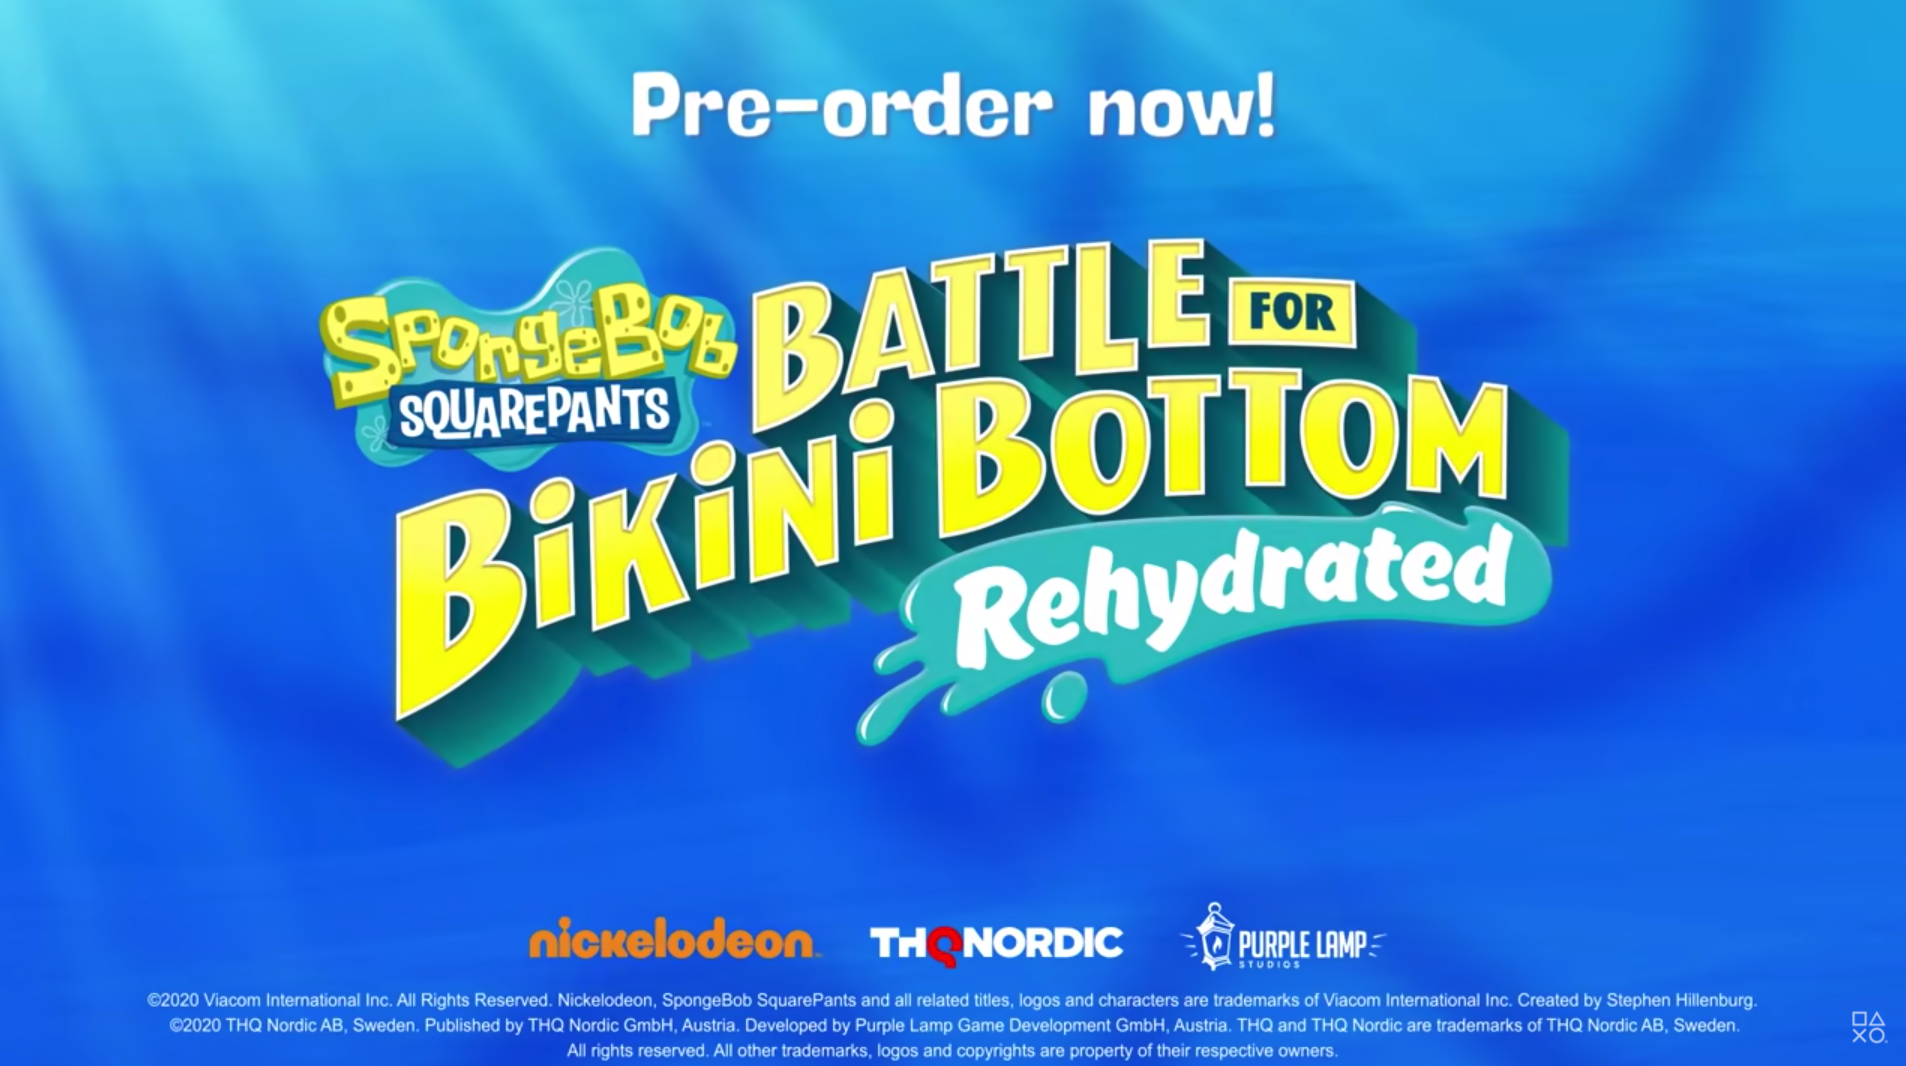 \'Spongebob Bottom: Squarepants: Pre-order Bikini for Battle Rehydrated\'